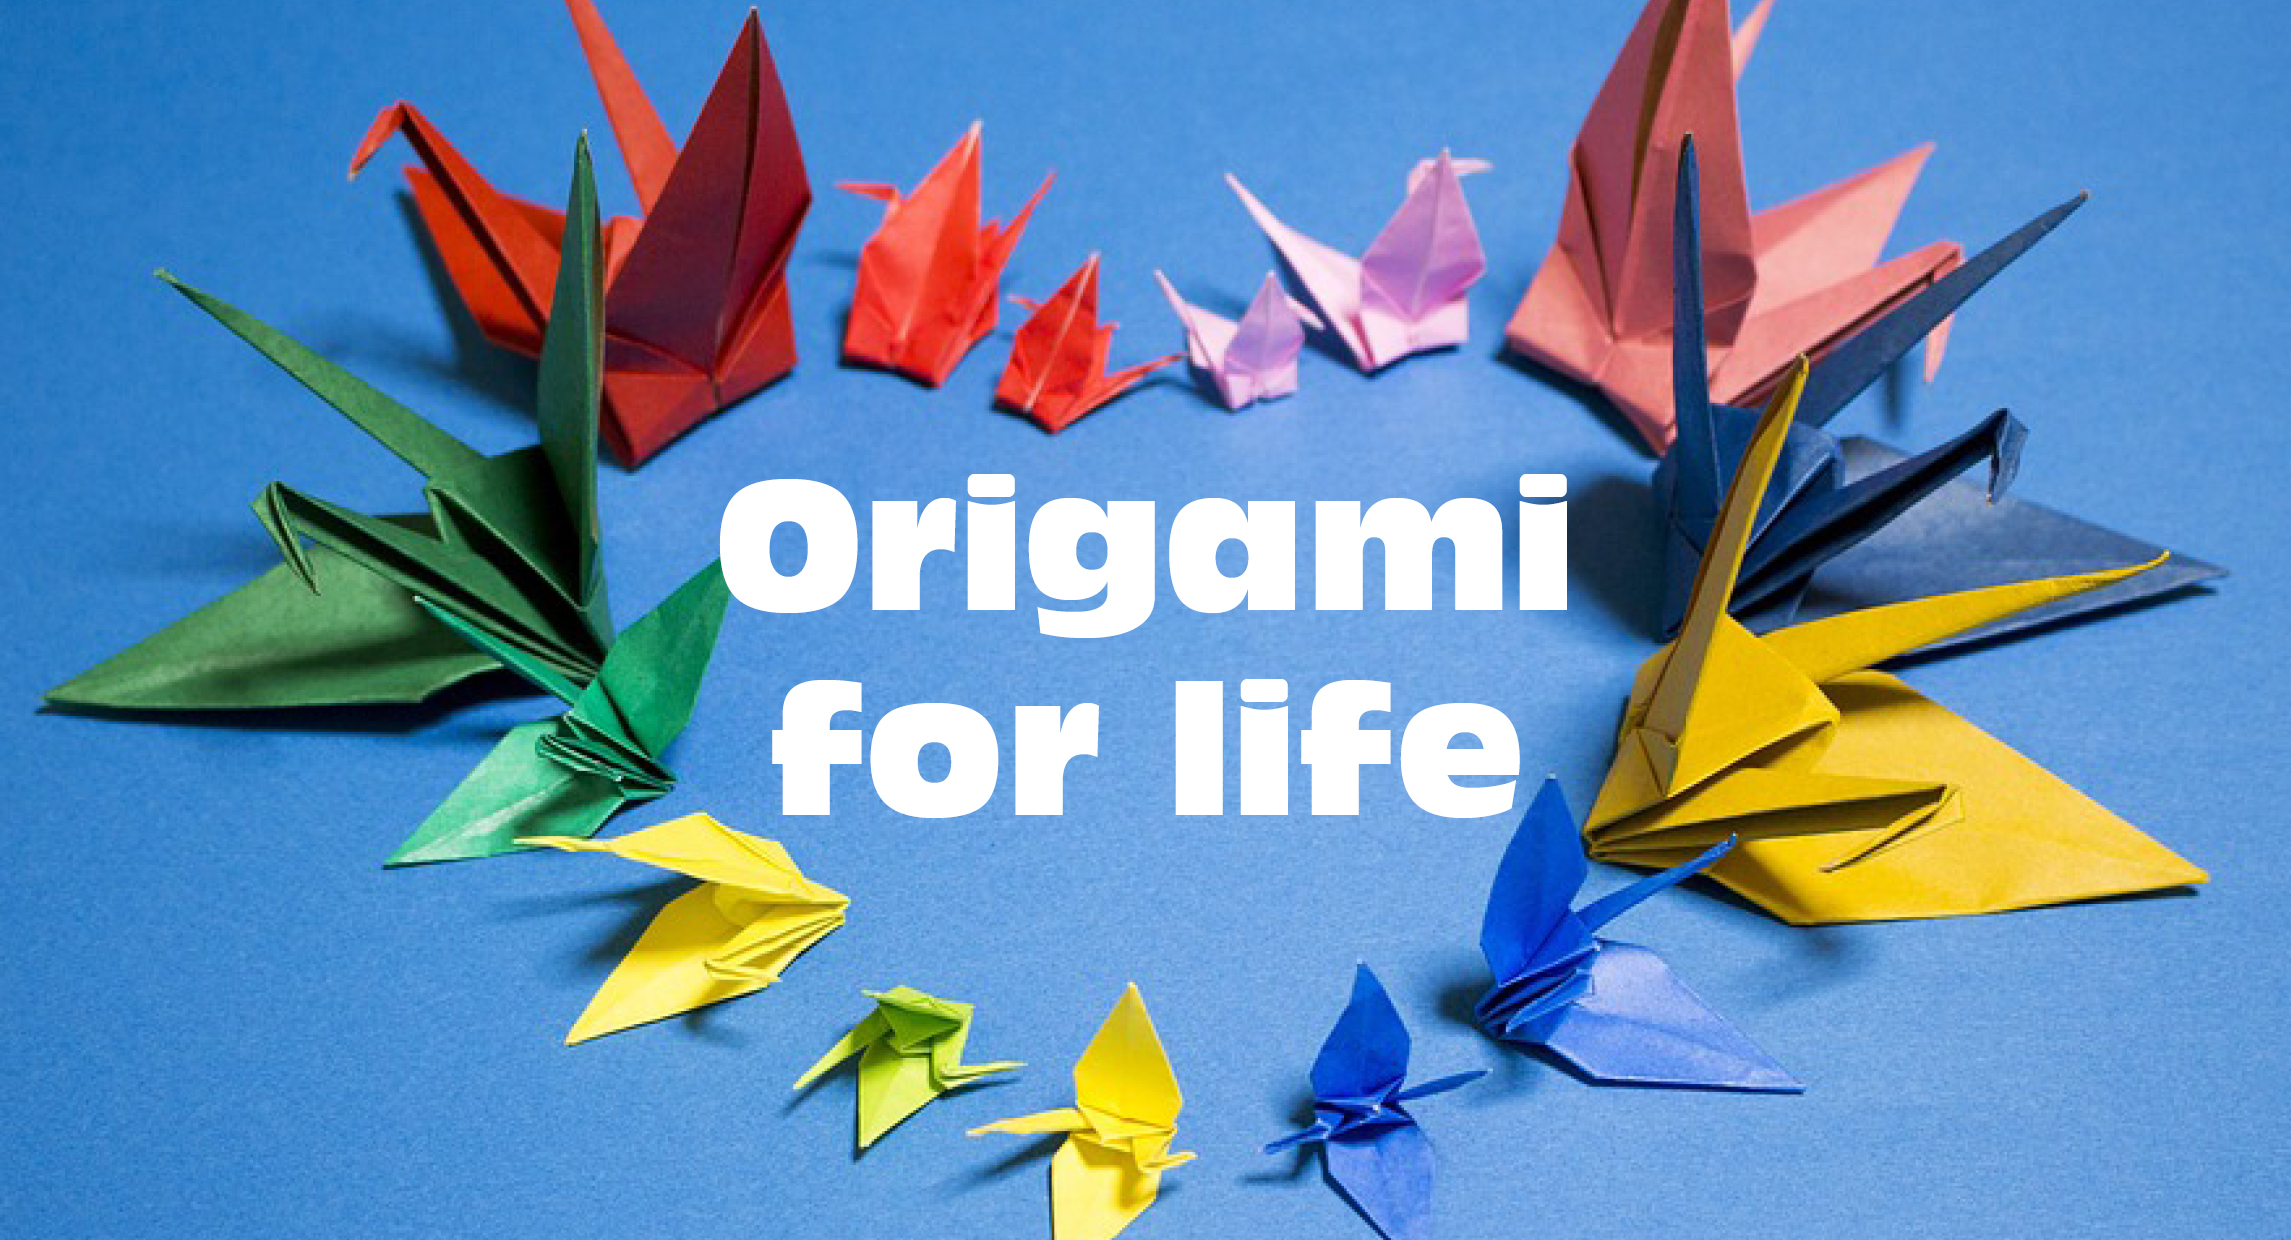 Origami for life février 2021